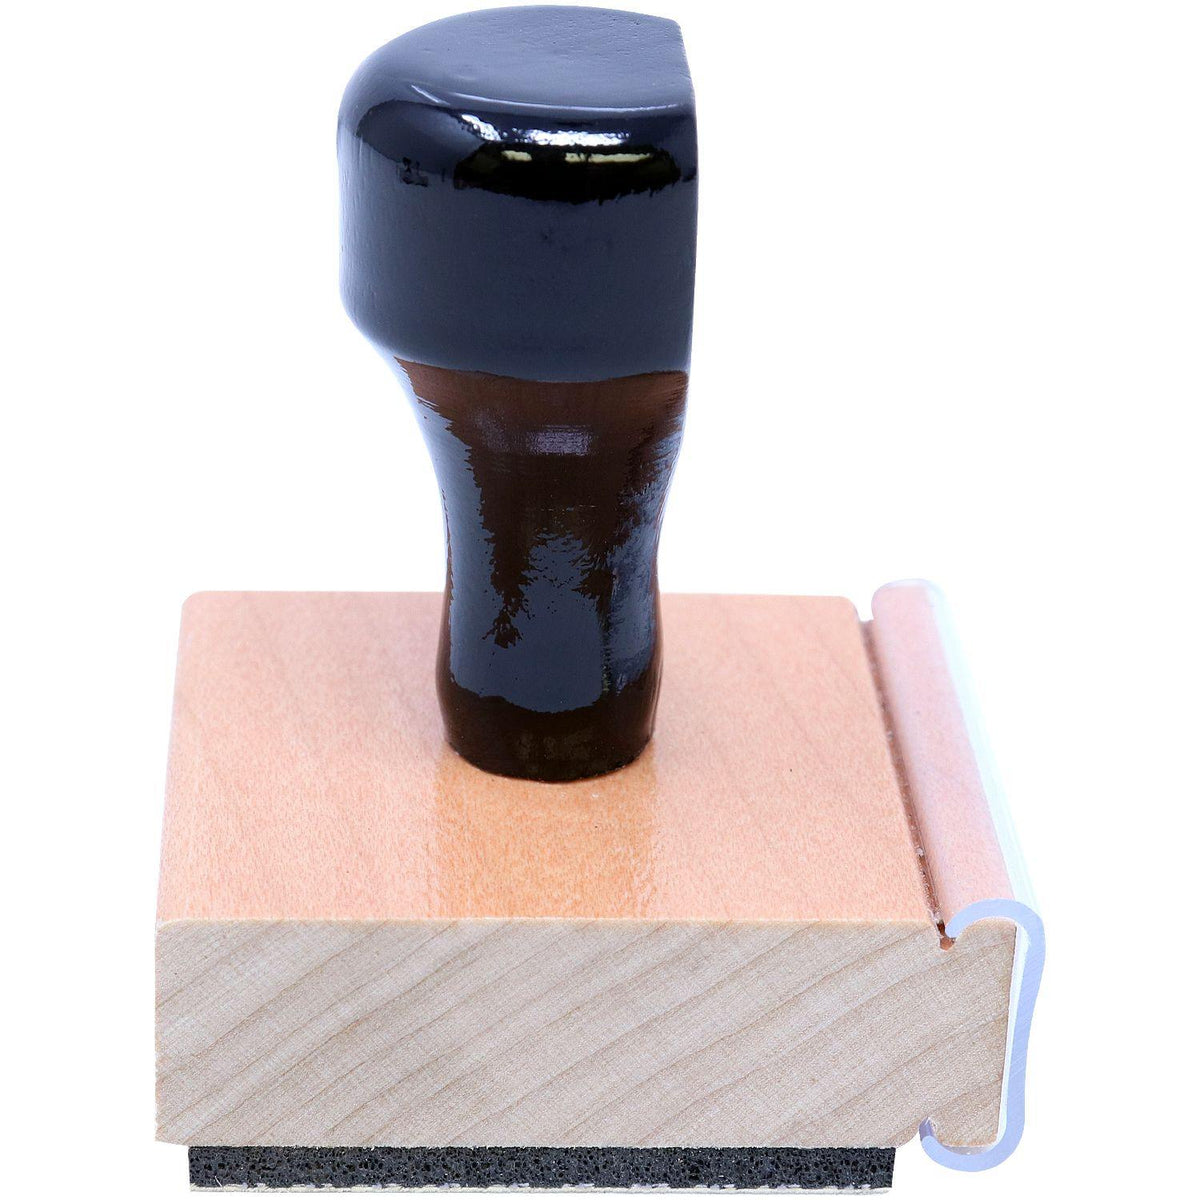 Interior Designer Regular Rubber Stamp of Seal - Engineer Seal Stamps - Stamp Type_Hand Stamp, Type of Use_Professional